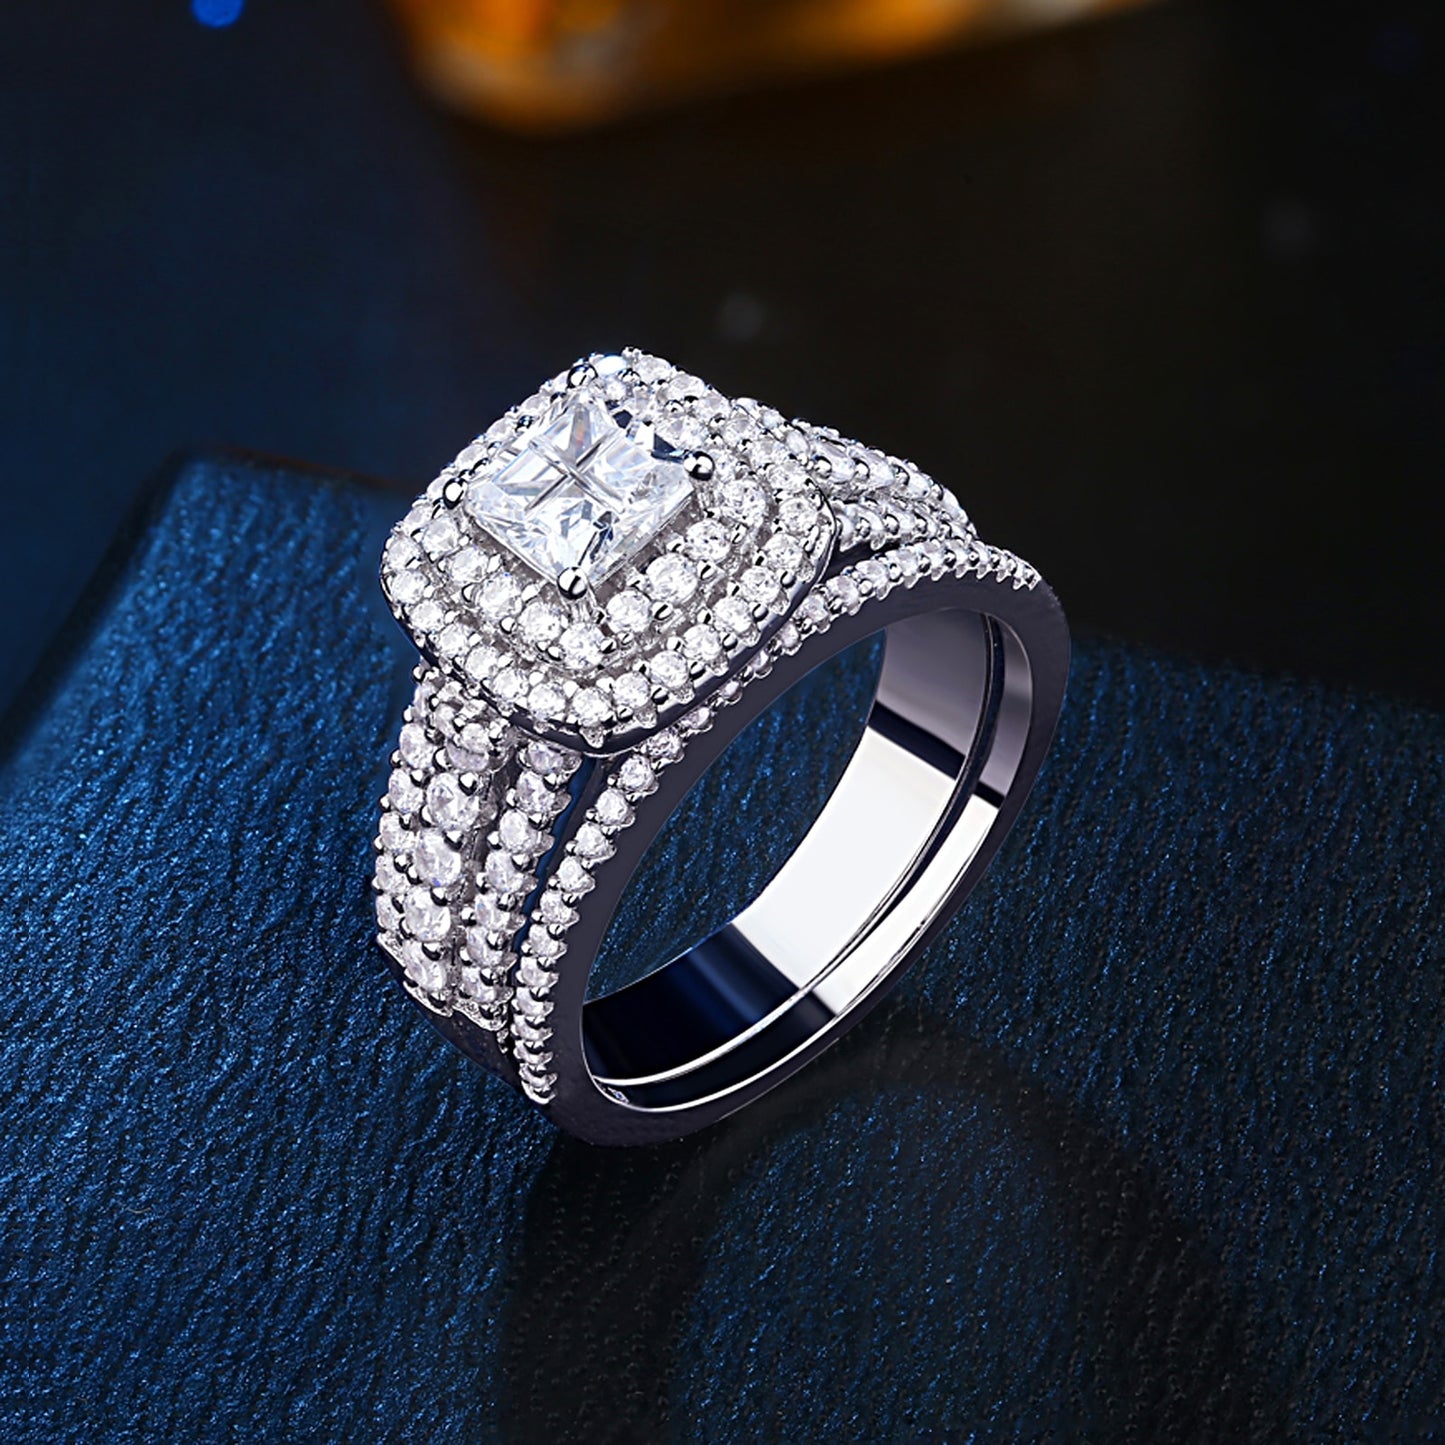 Elegant Sterling Silver Halo Wedding Ring For Women